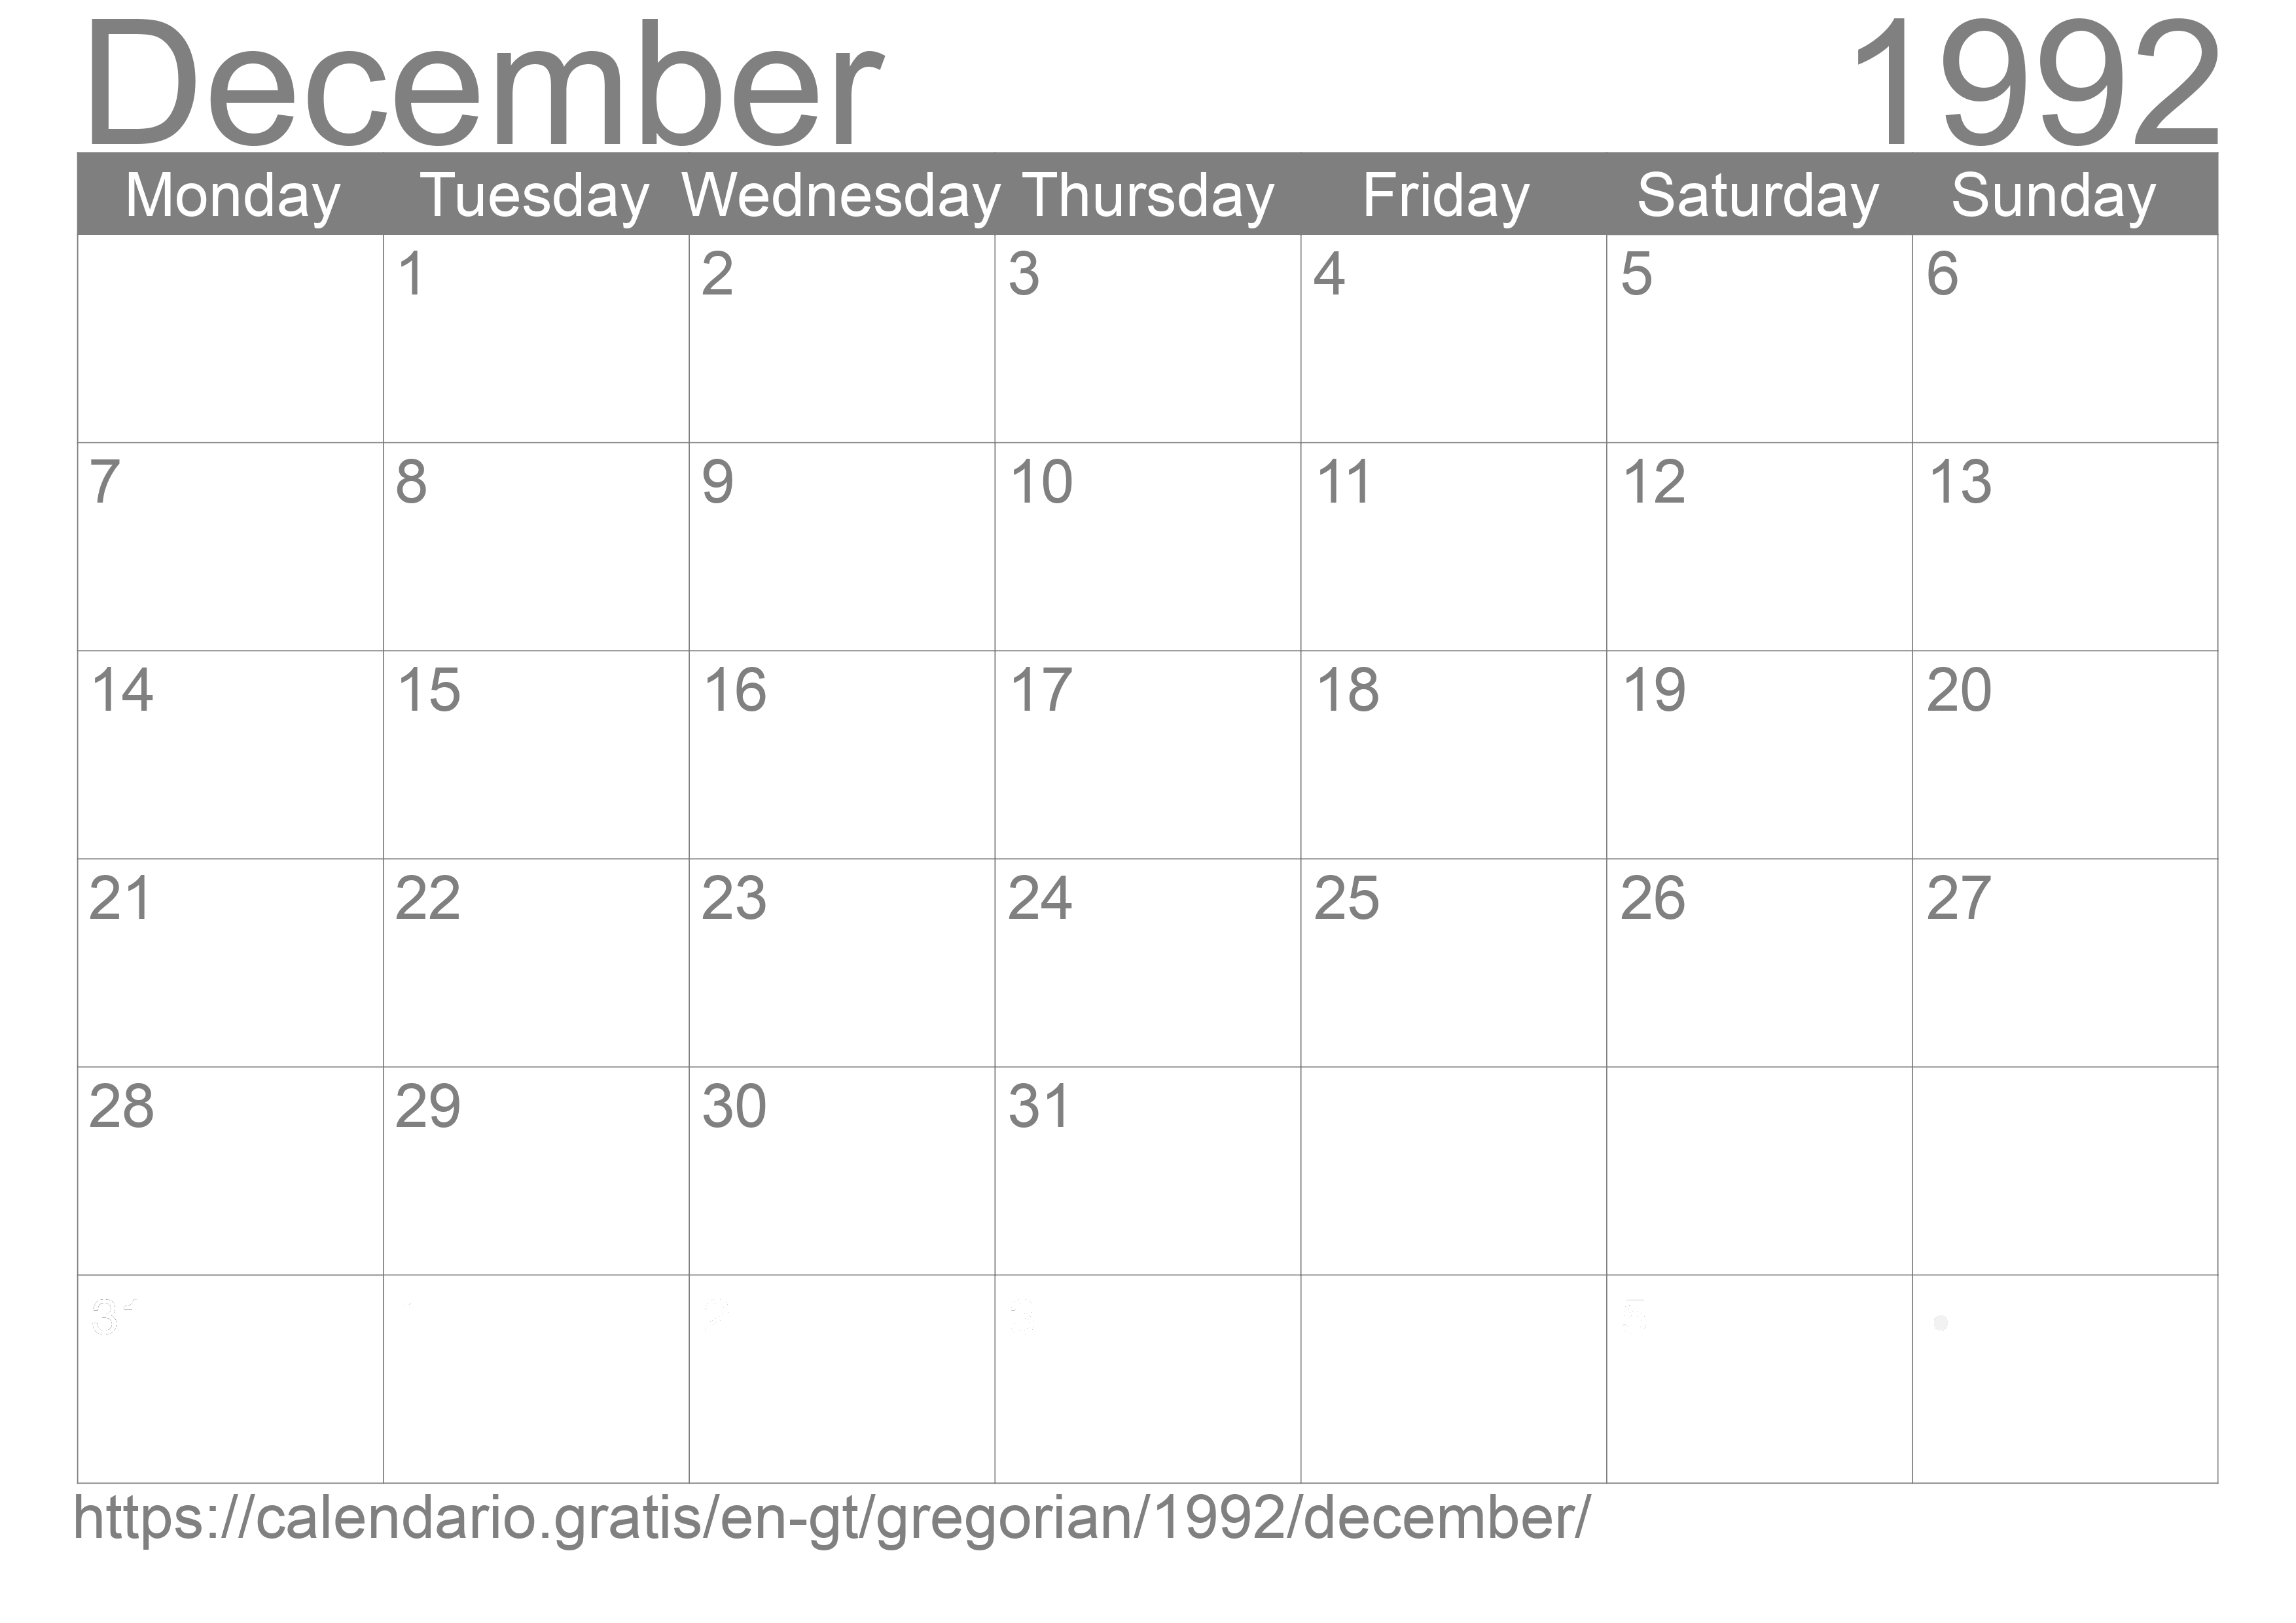 Calendar December 1992 to print